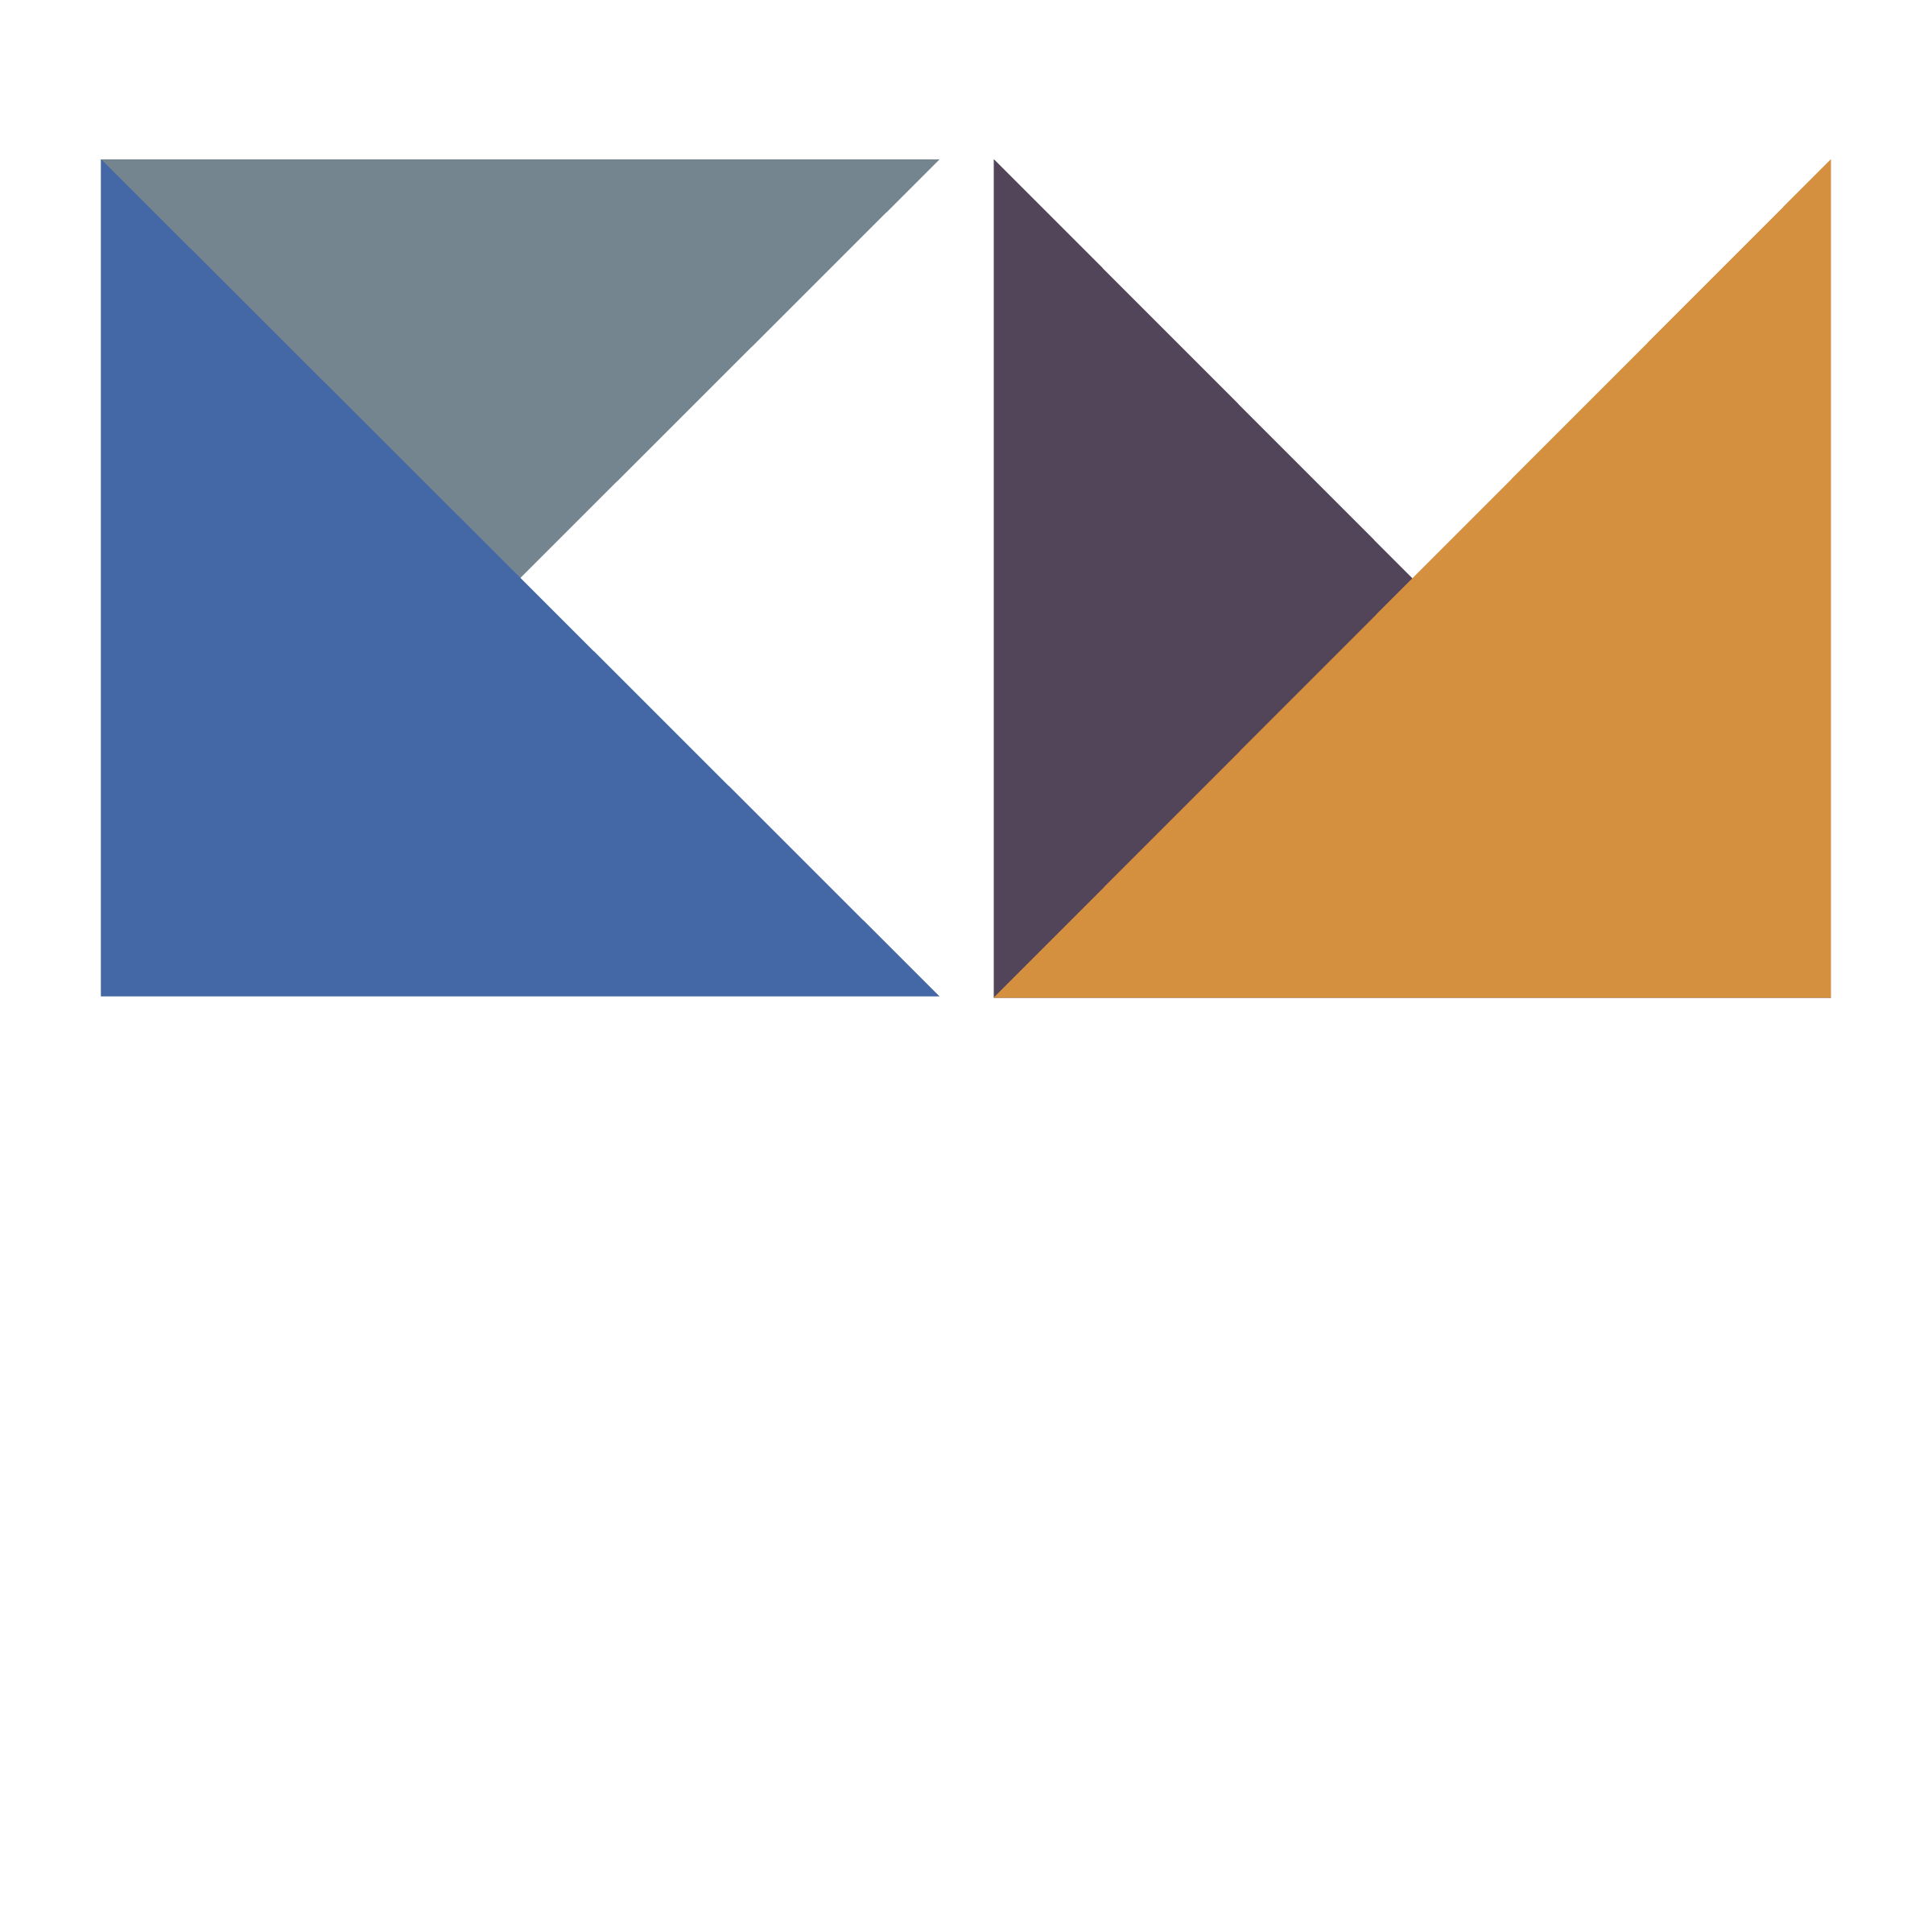 Welcome to Bennington Museum